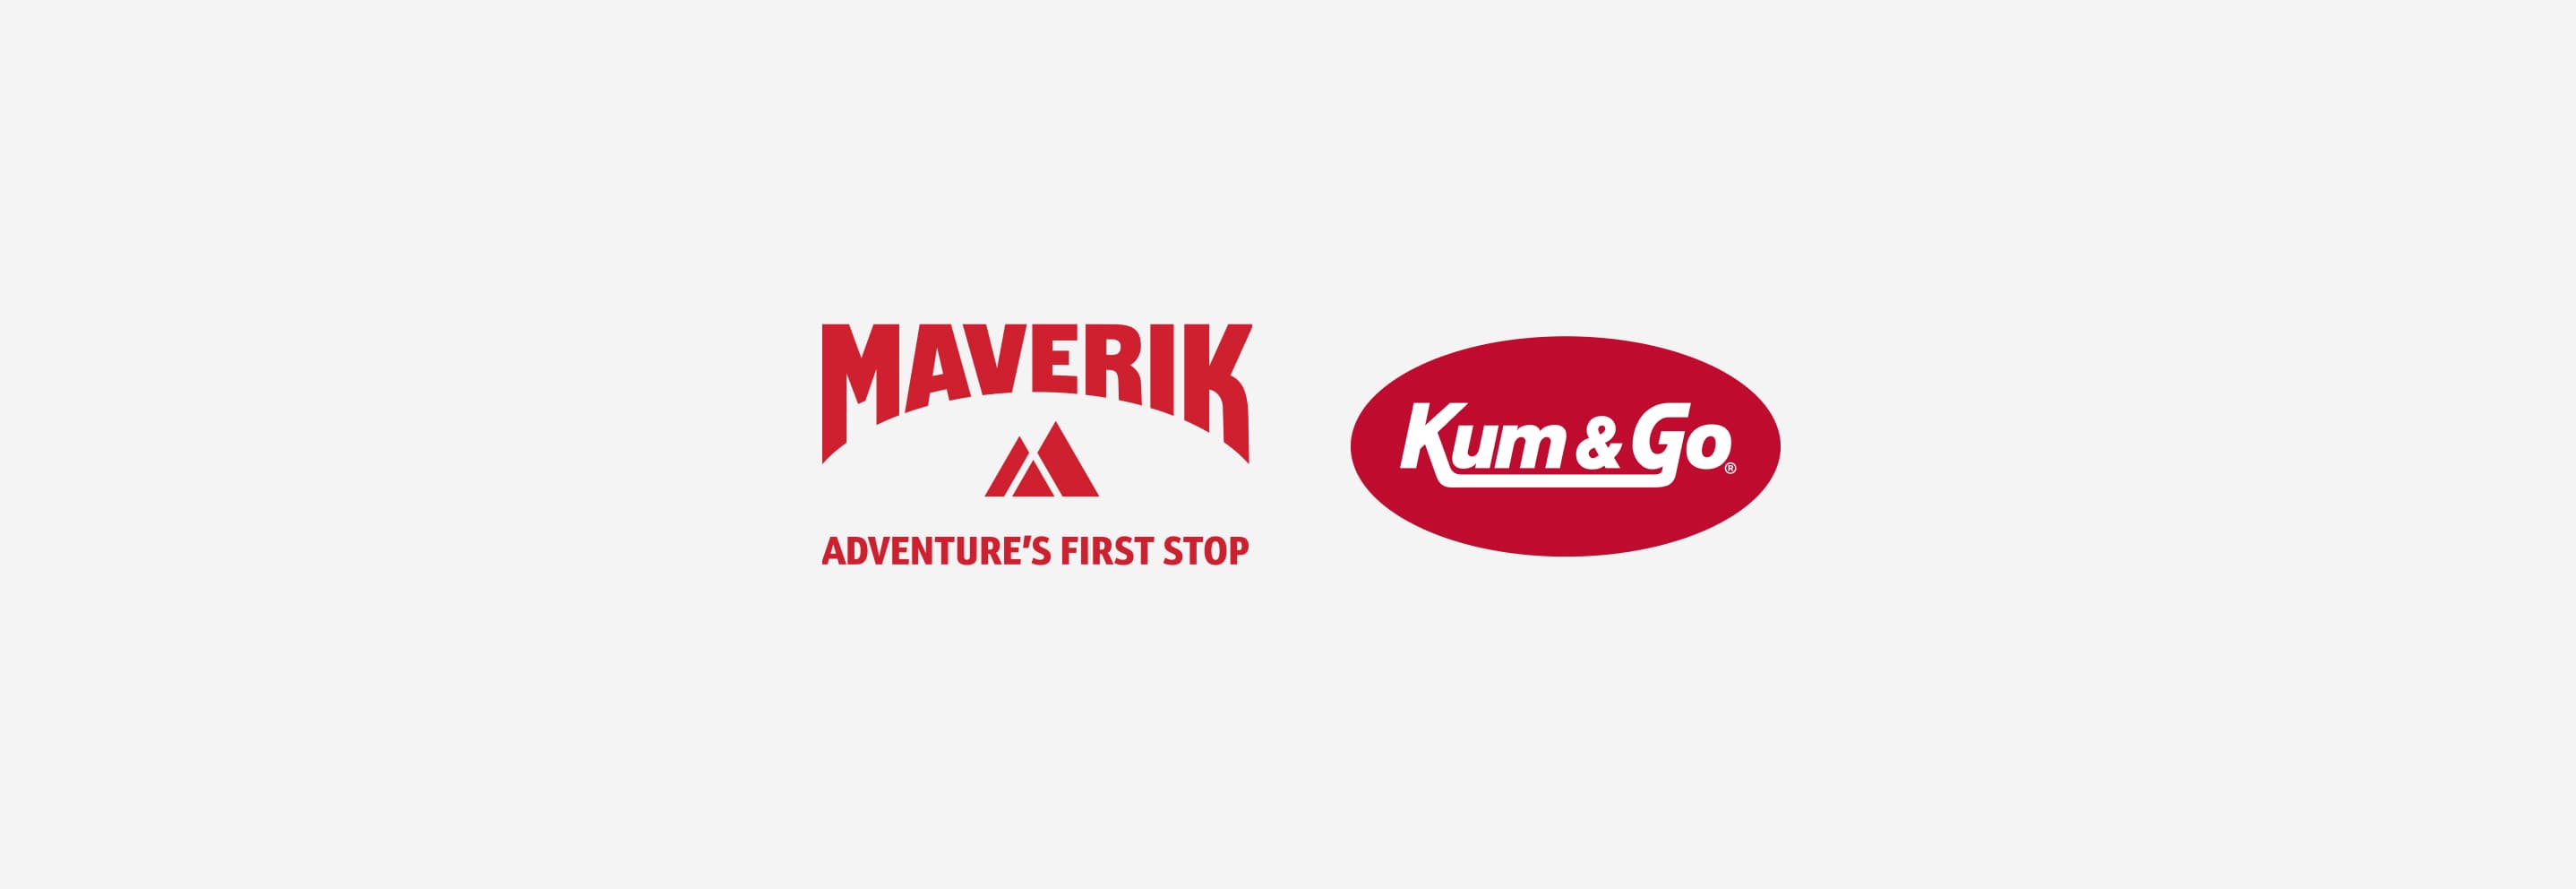 Maverik – Adventure’s First Stop